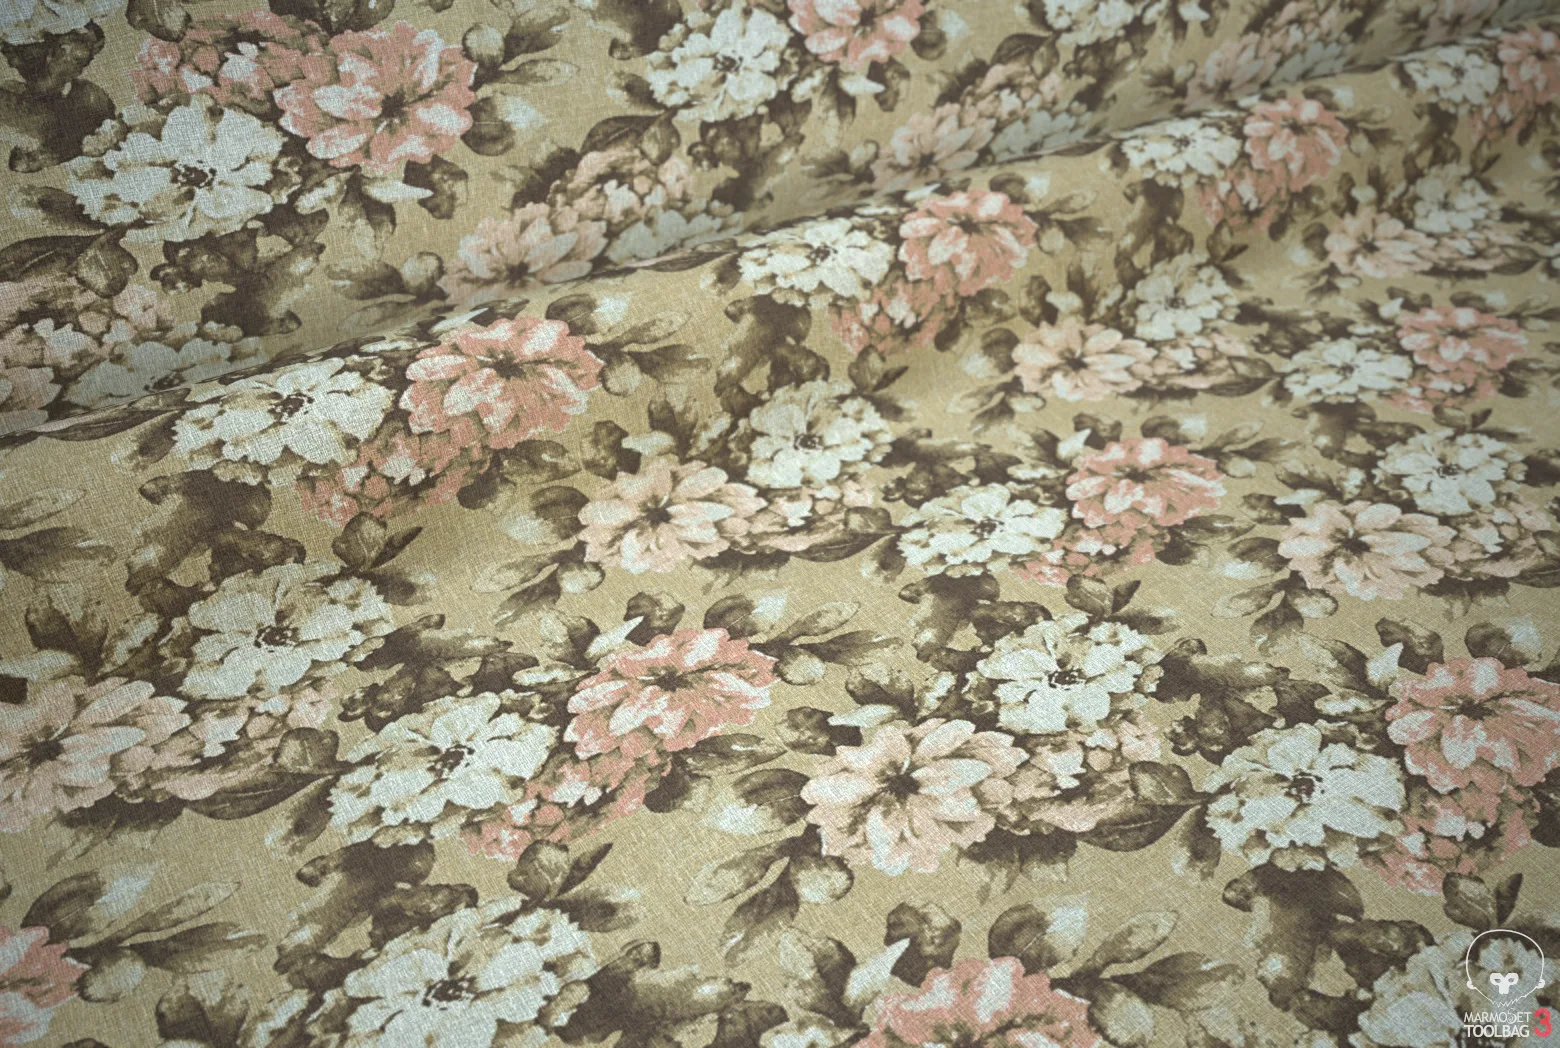 Fabric Vol 19 - Floral